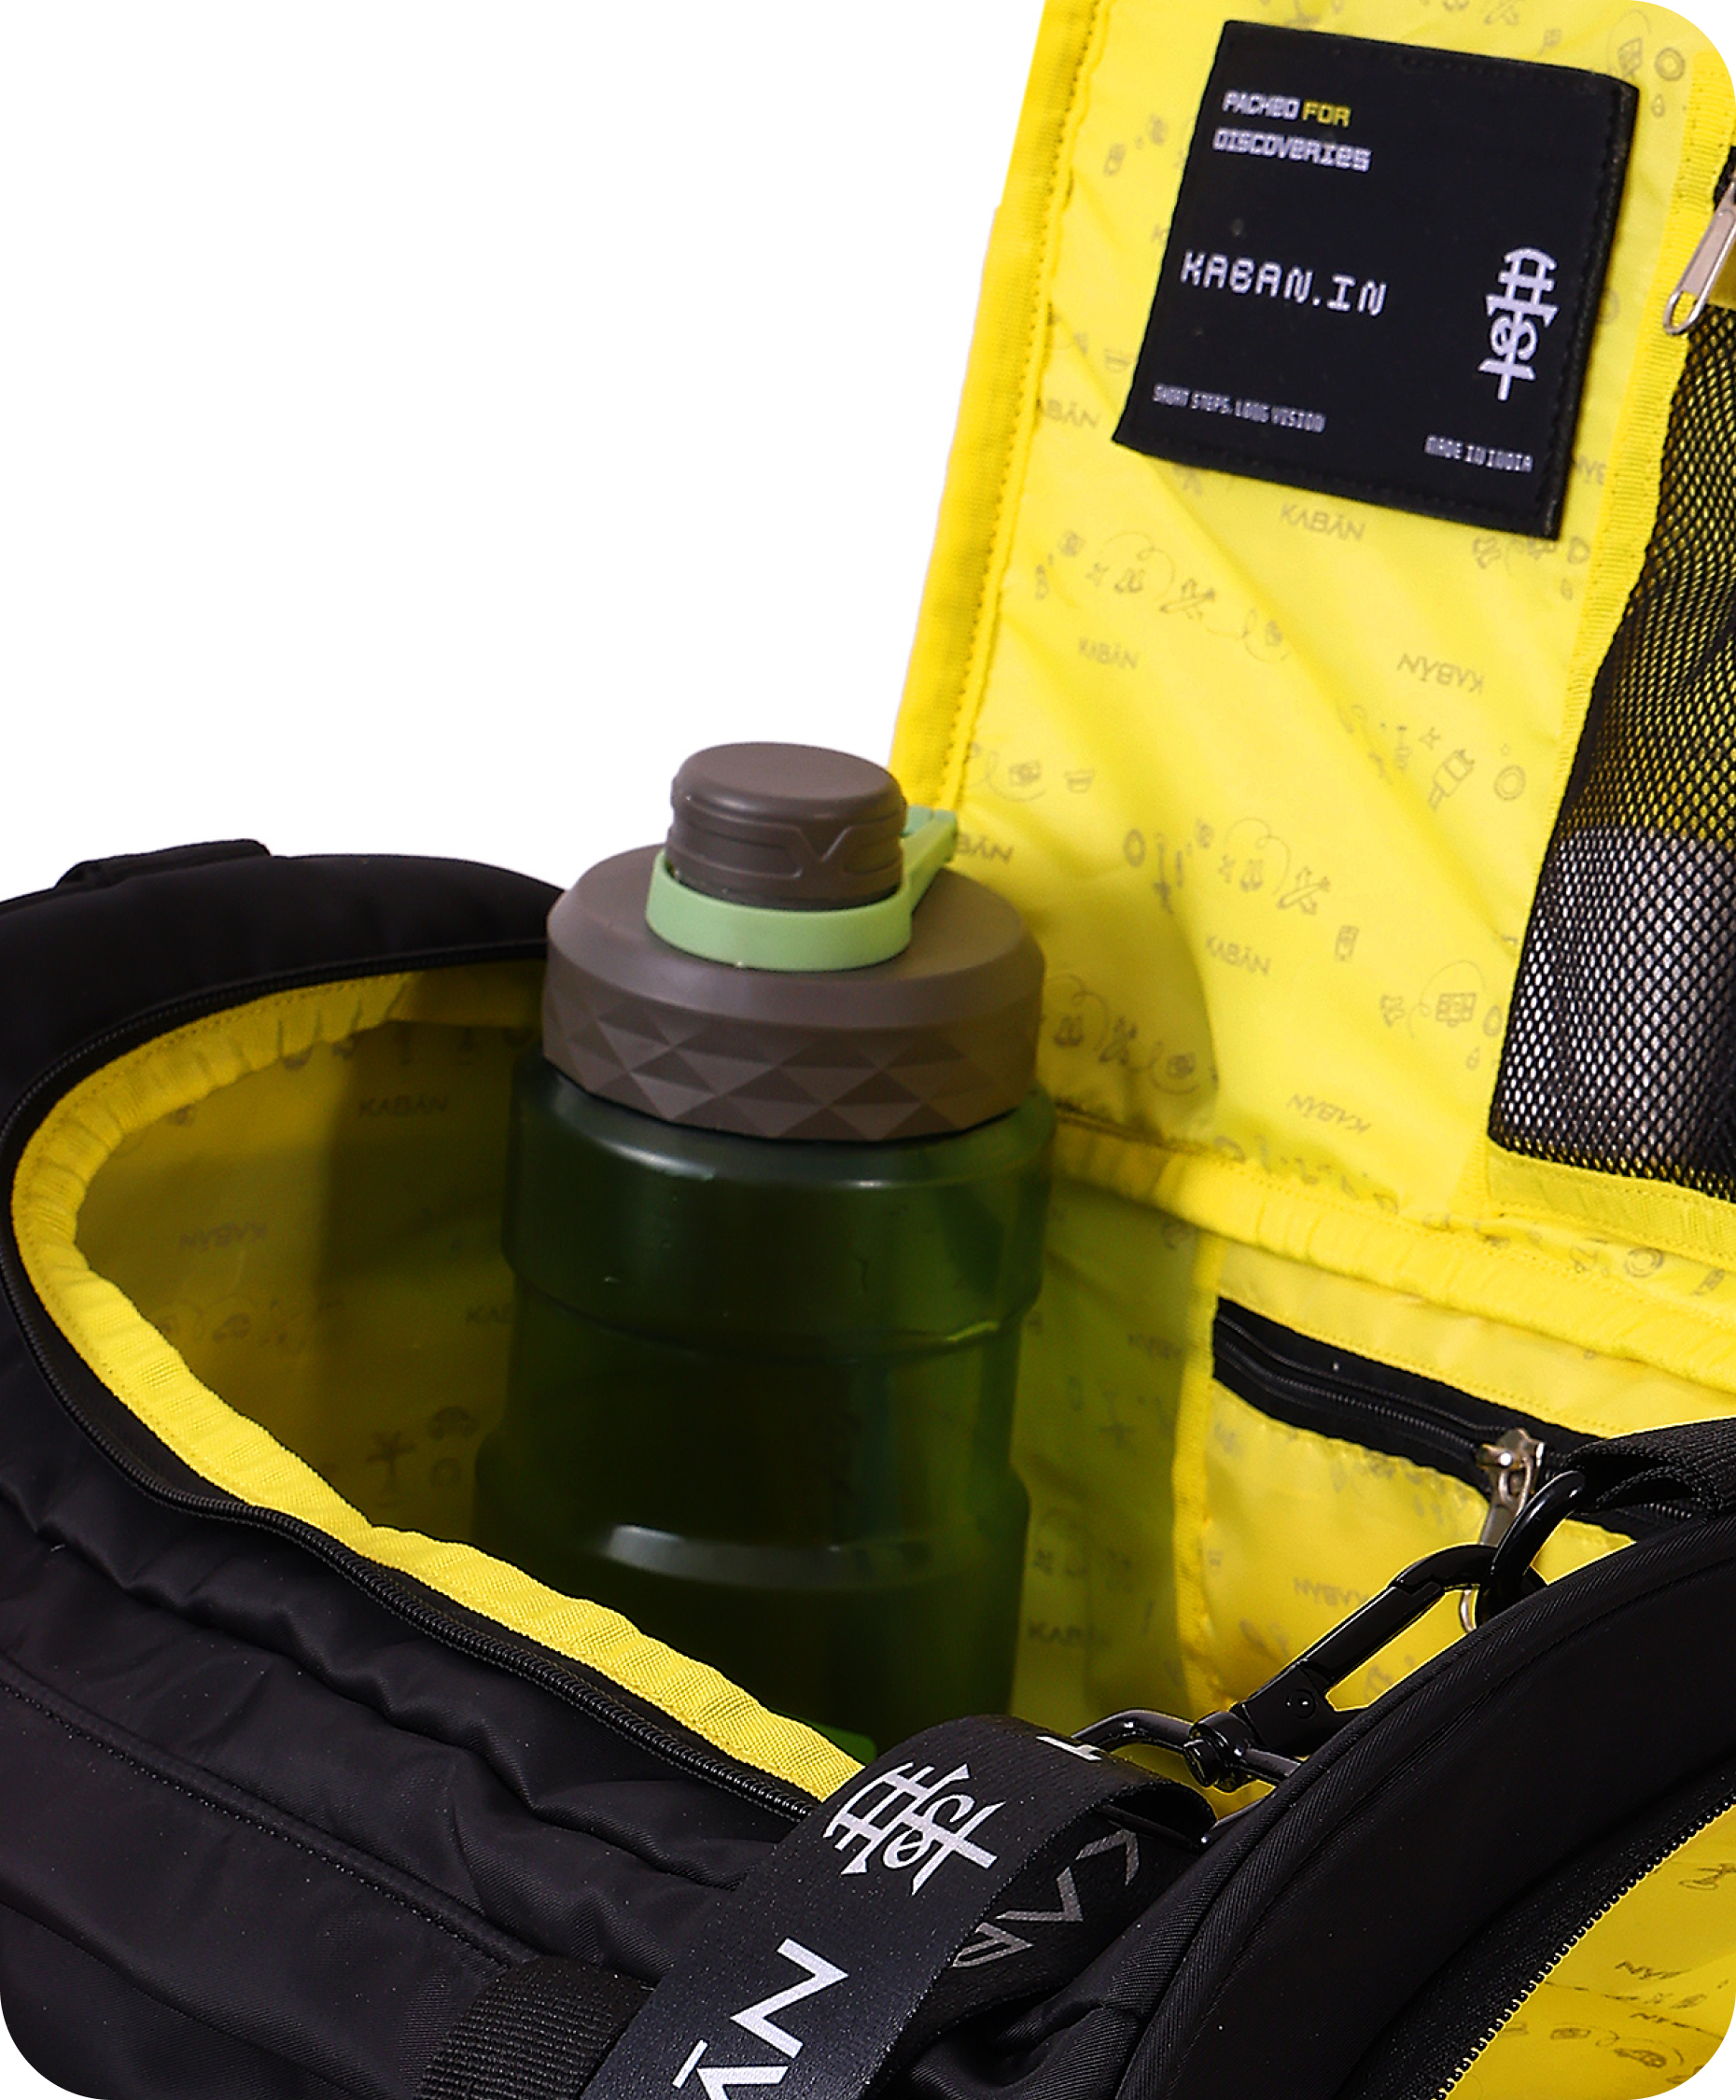 Eclipse Nest Black Water-Resistant Duffle bag Gym bag